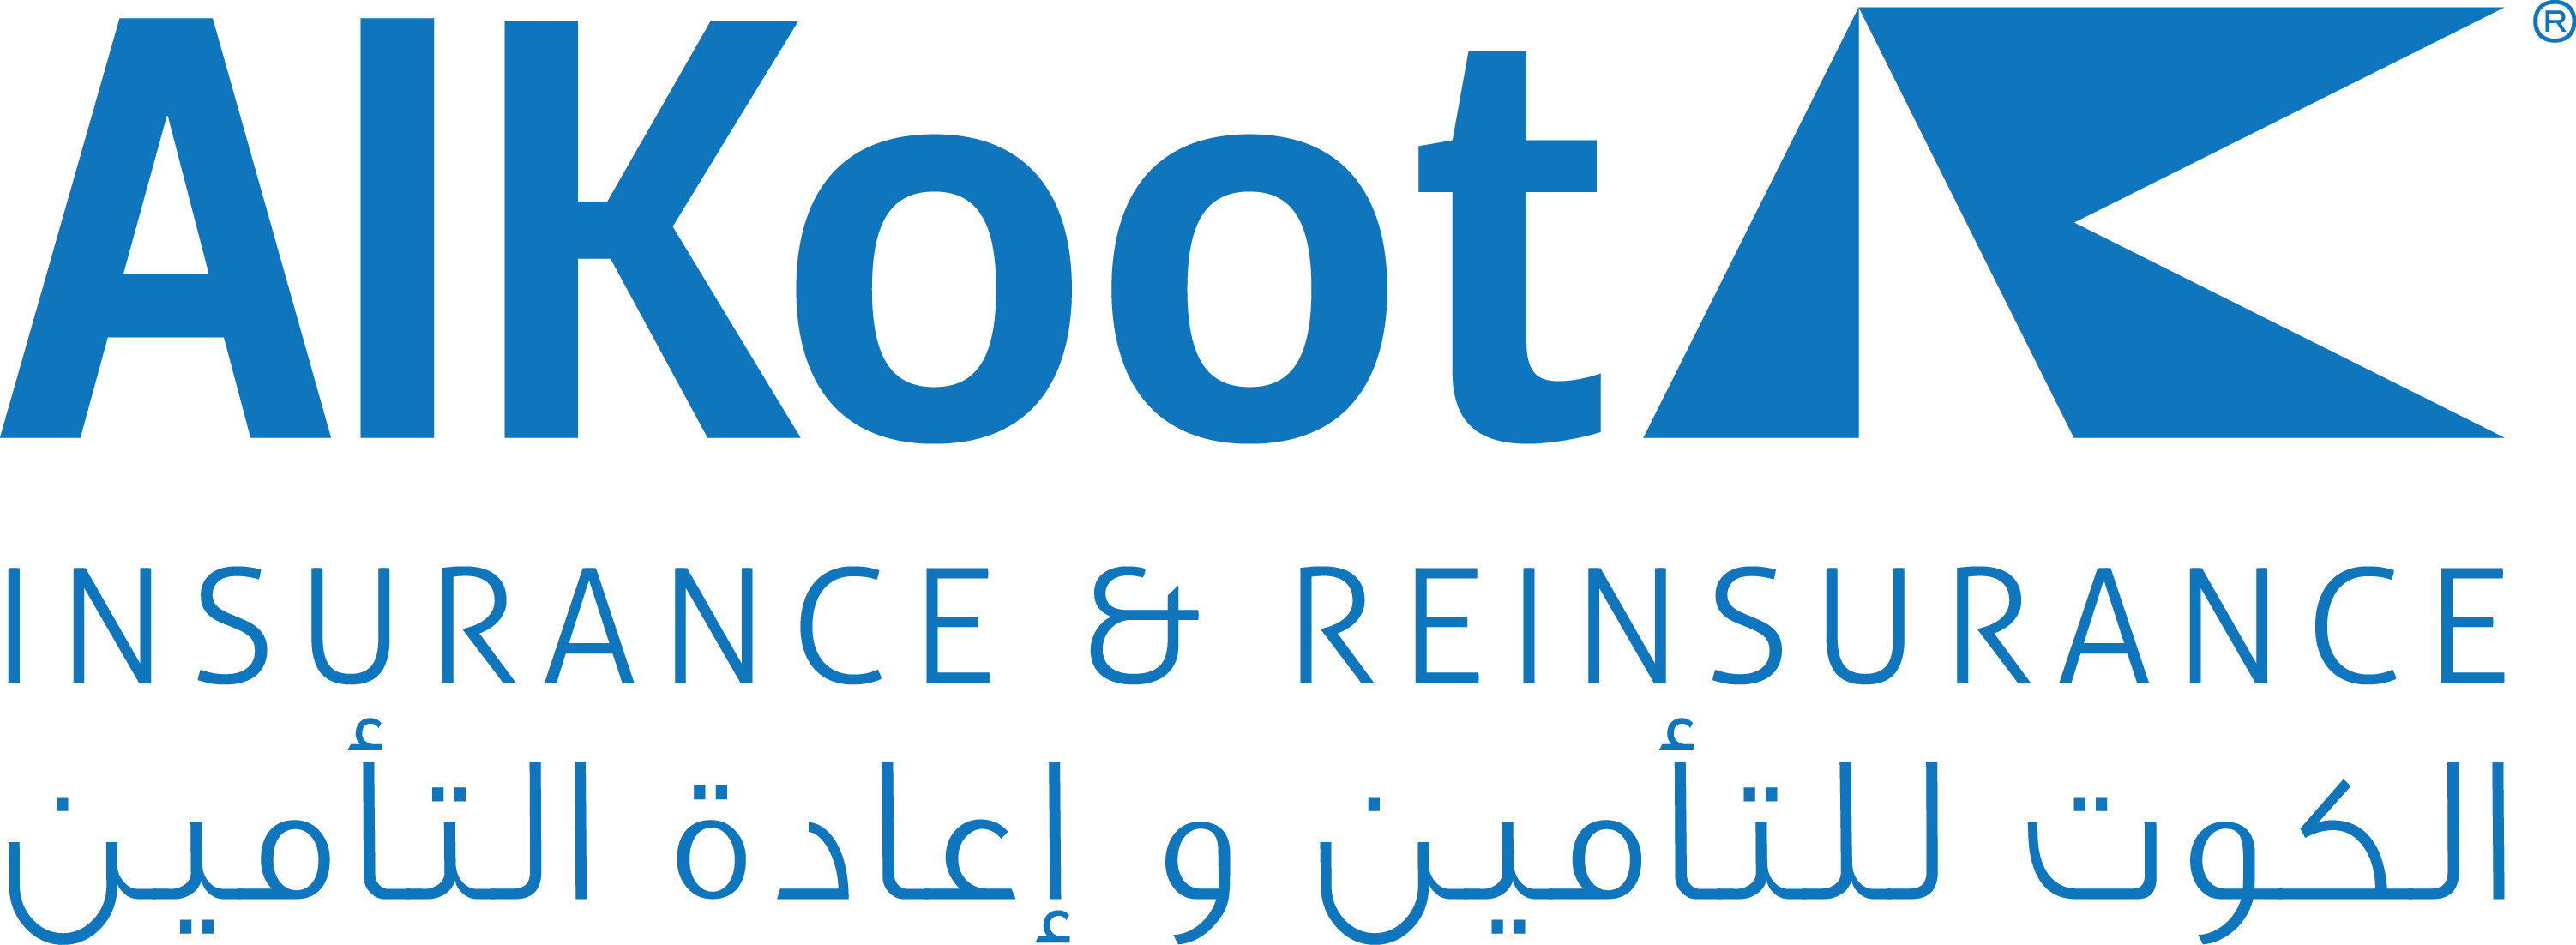 Al-Koot-New-Logo